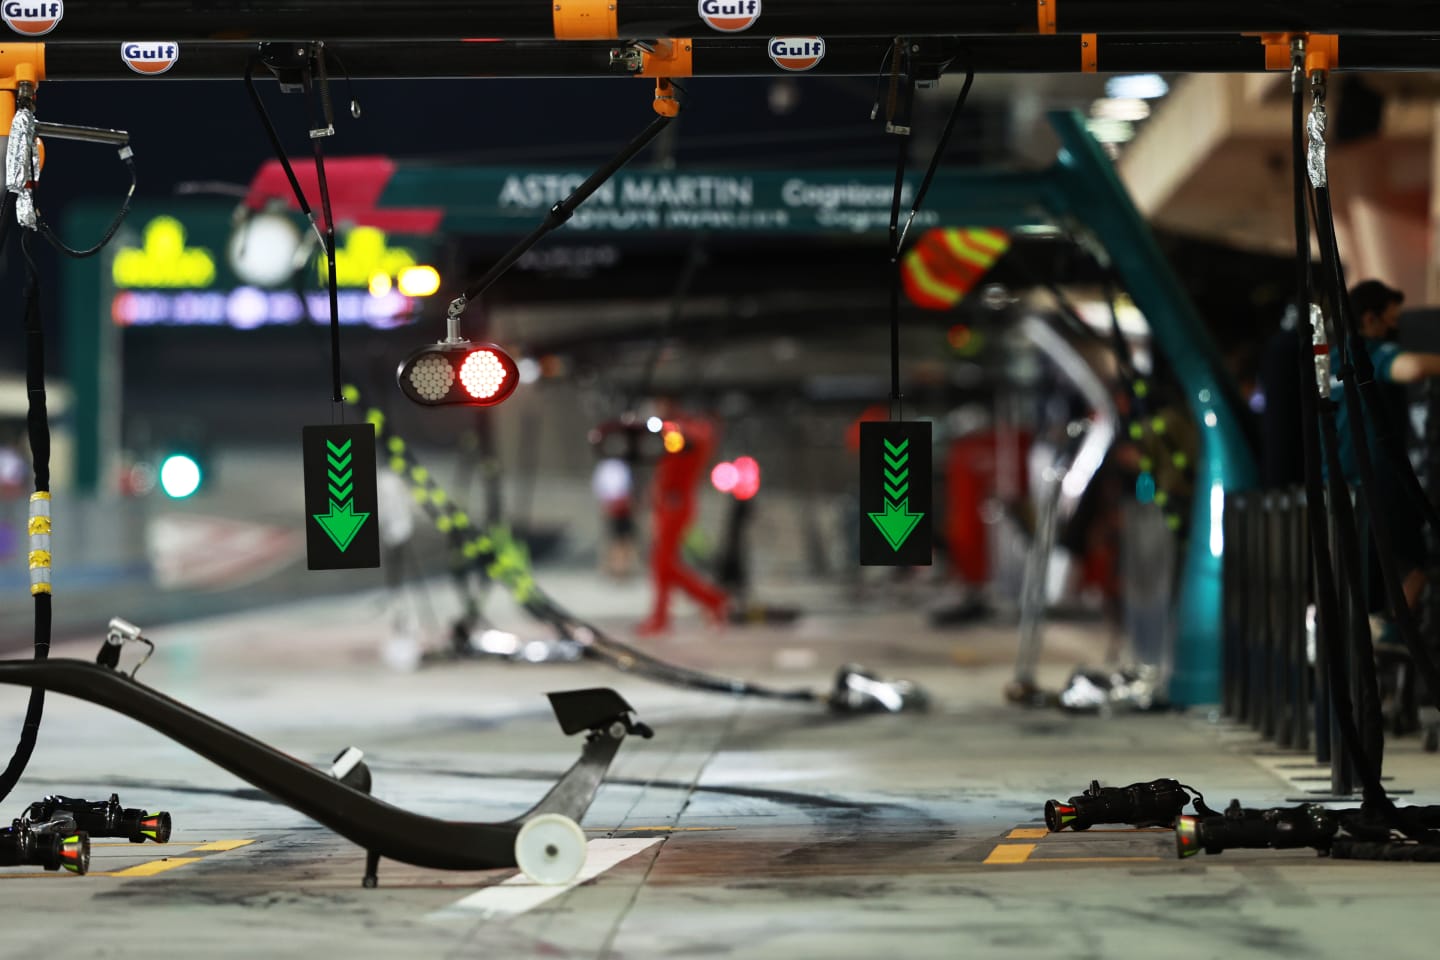 The McLaren F1 garage primed for action under the lights